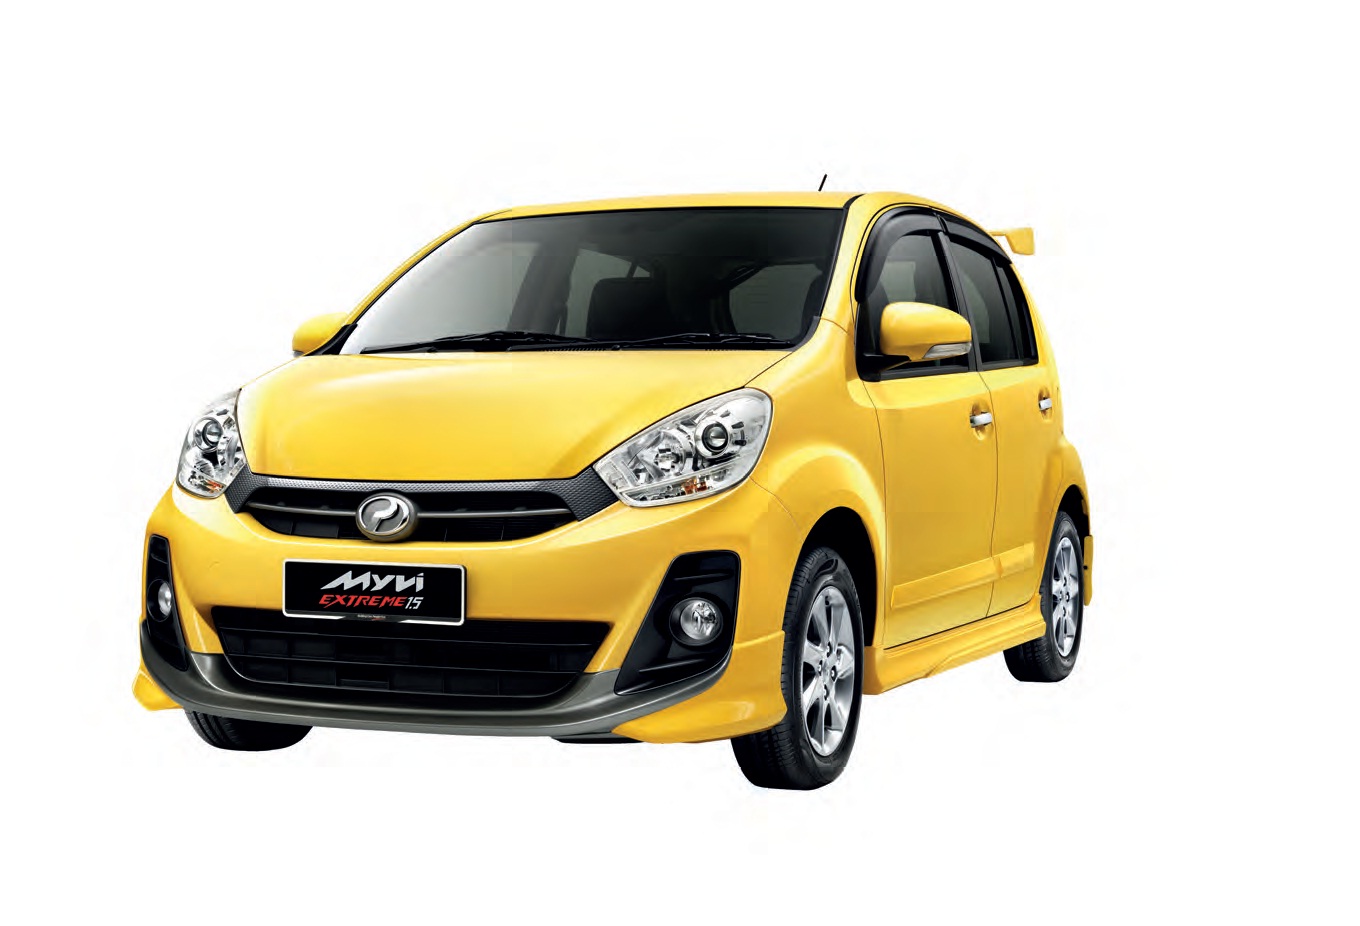 PROMOSI PERODUA MALAYSIA: Promosi Perodua Myvi 1.5 2015 